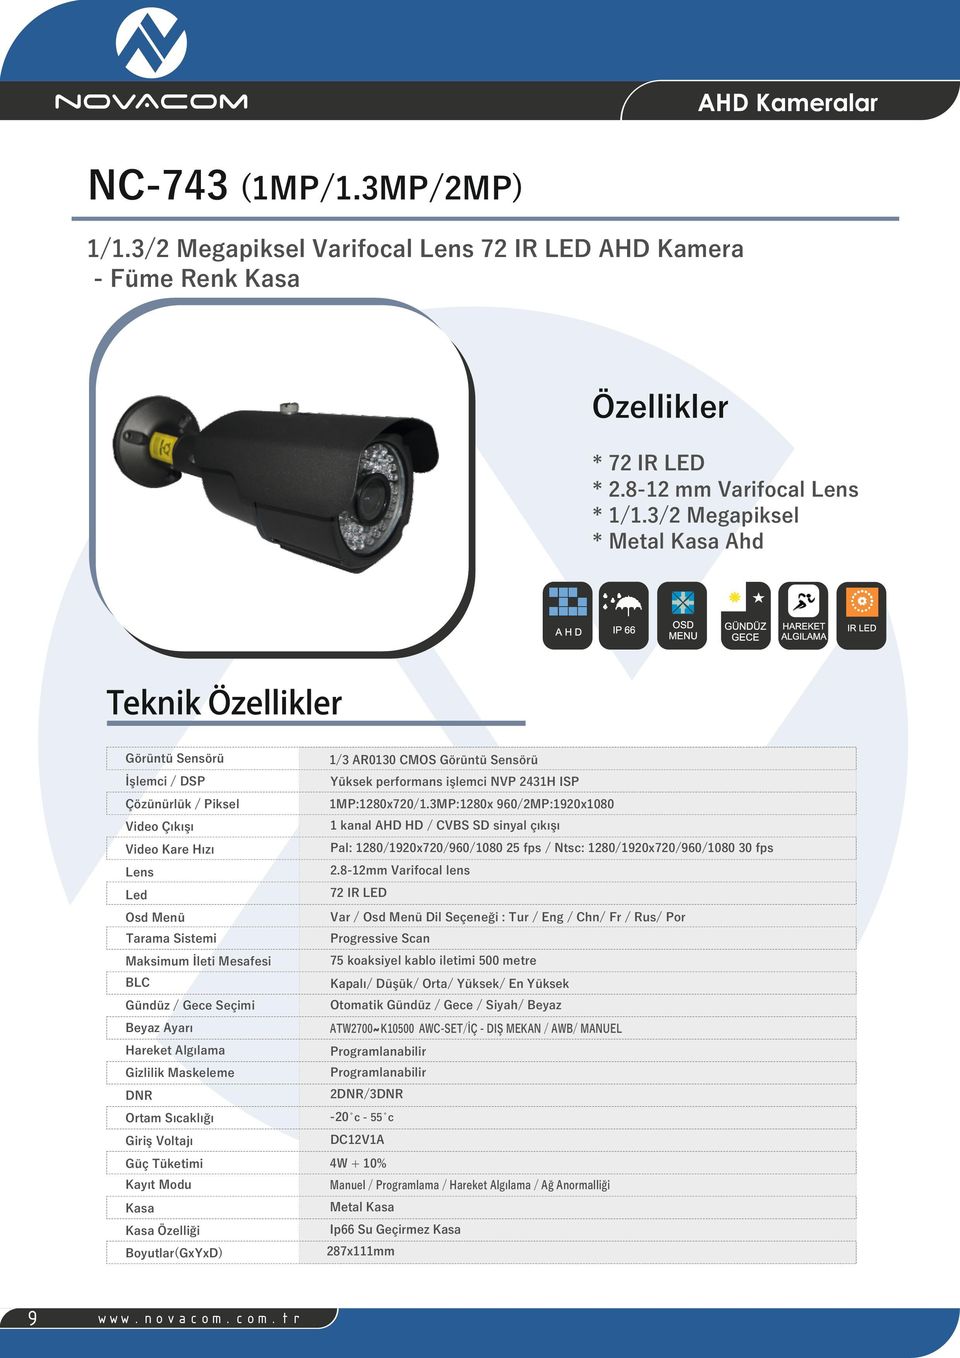 3MP:1280x 960/2MP:1920x1080 Video Çıkışı 1 kanal AHD HD / CVBS SD sinyal çıkışı Video Kare Hızı Pal: 1280/1920x720/960/1080 25 fps / Ntsc: 1280/1920x720/960/1080 30 fps Lens 2.